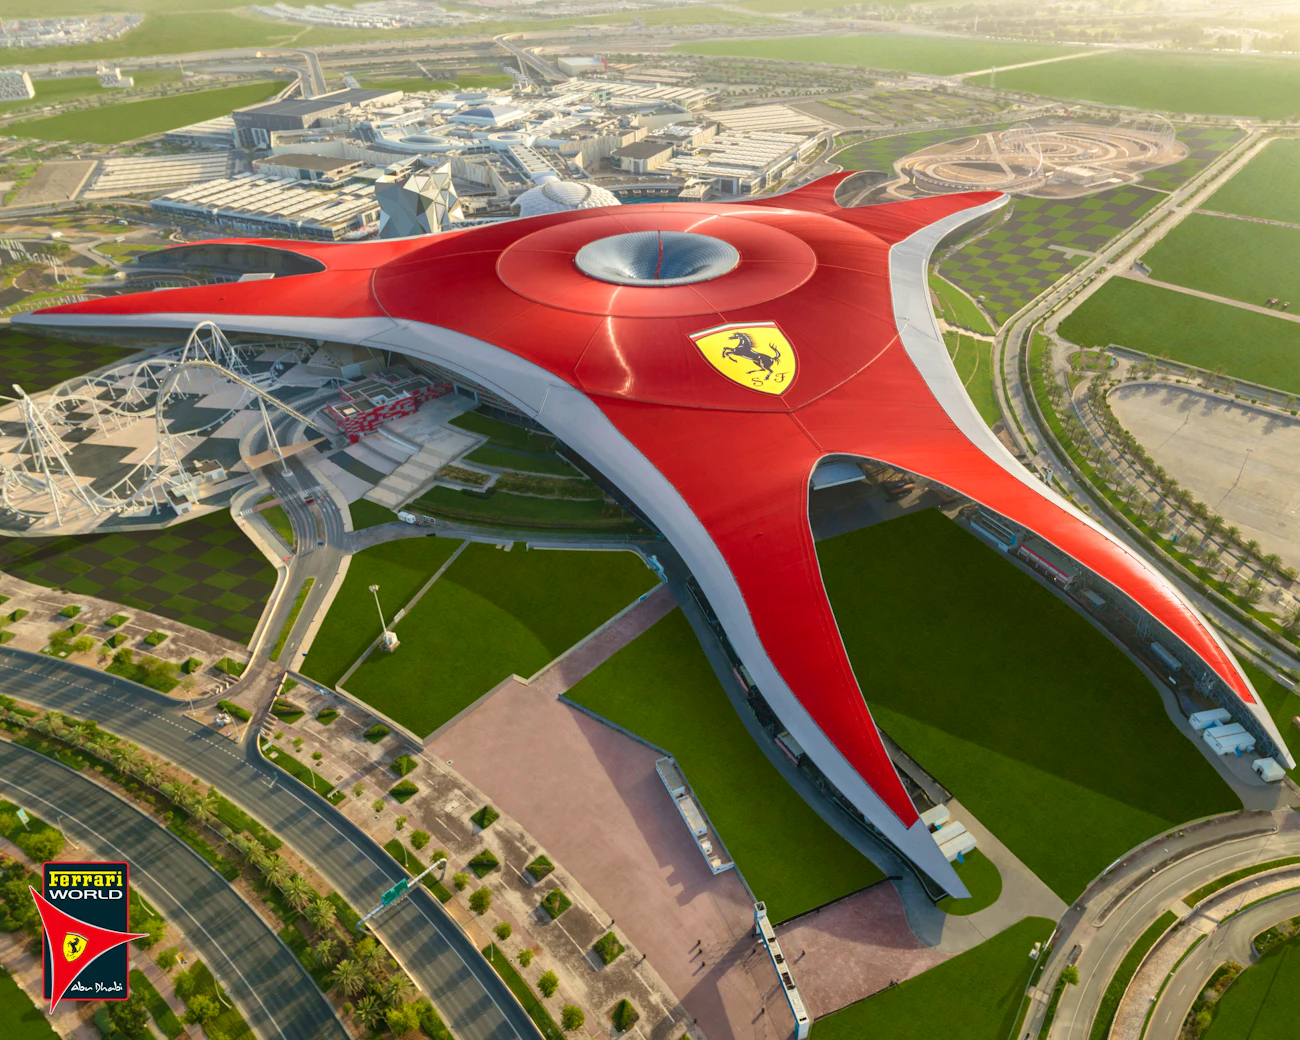 Ferrari World, Yas Waterworld, Warner Bros. World™ Abu Dhabi (2 Days Pass) Location